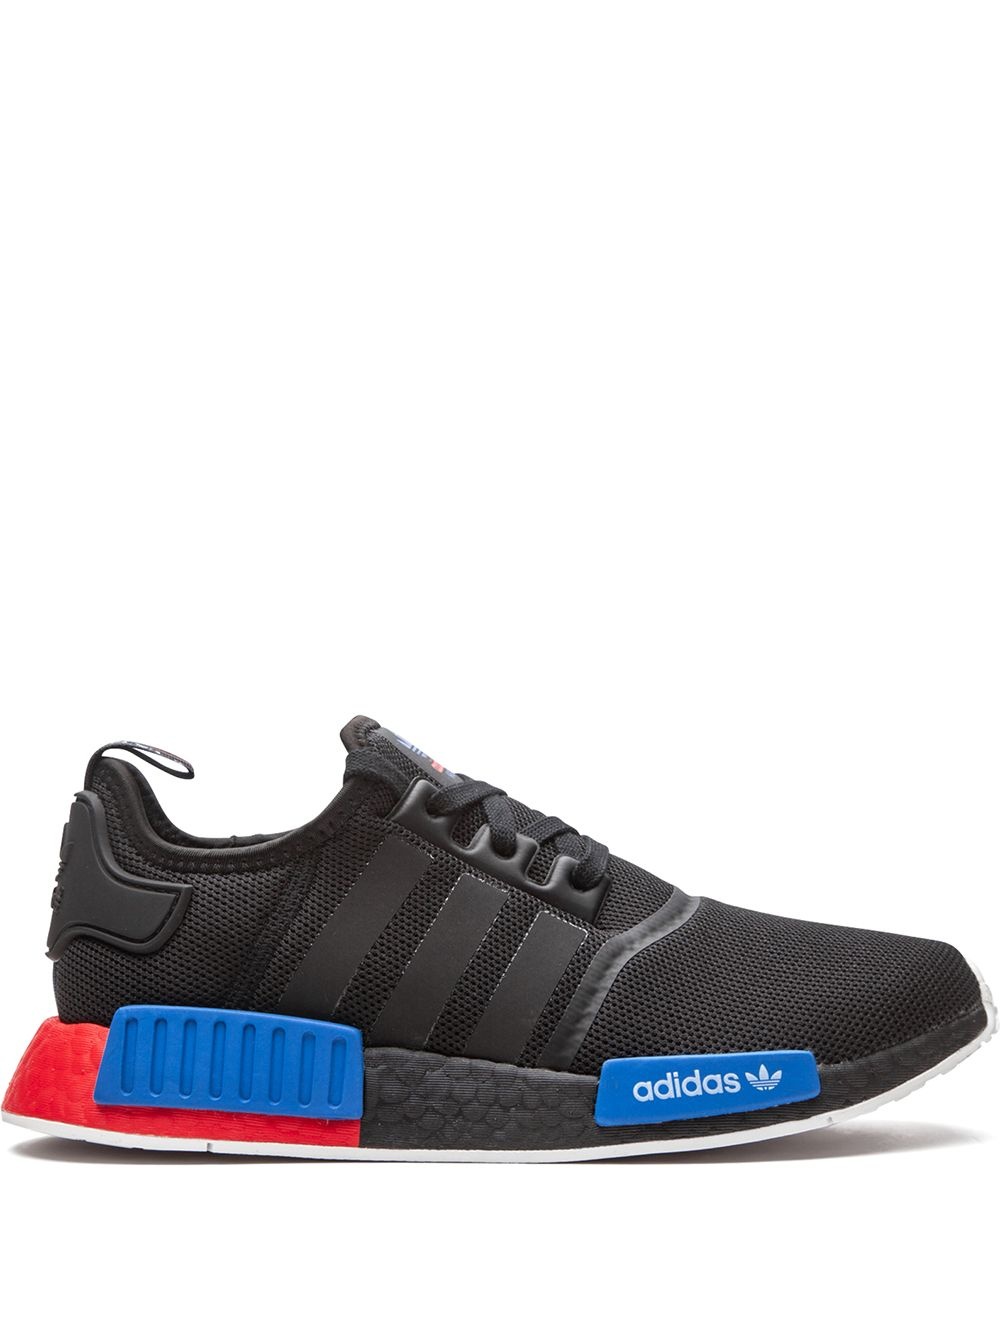 NMD_R1 "Black/Red/Blue" sneakers - 1